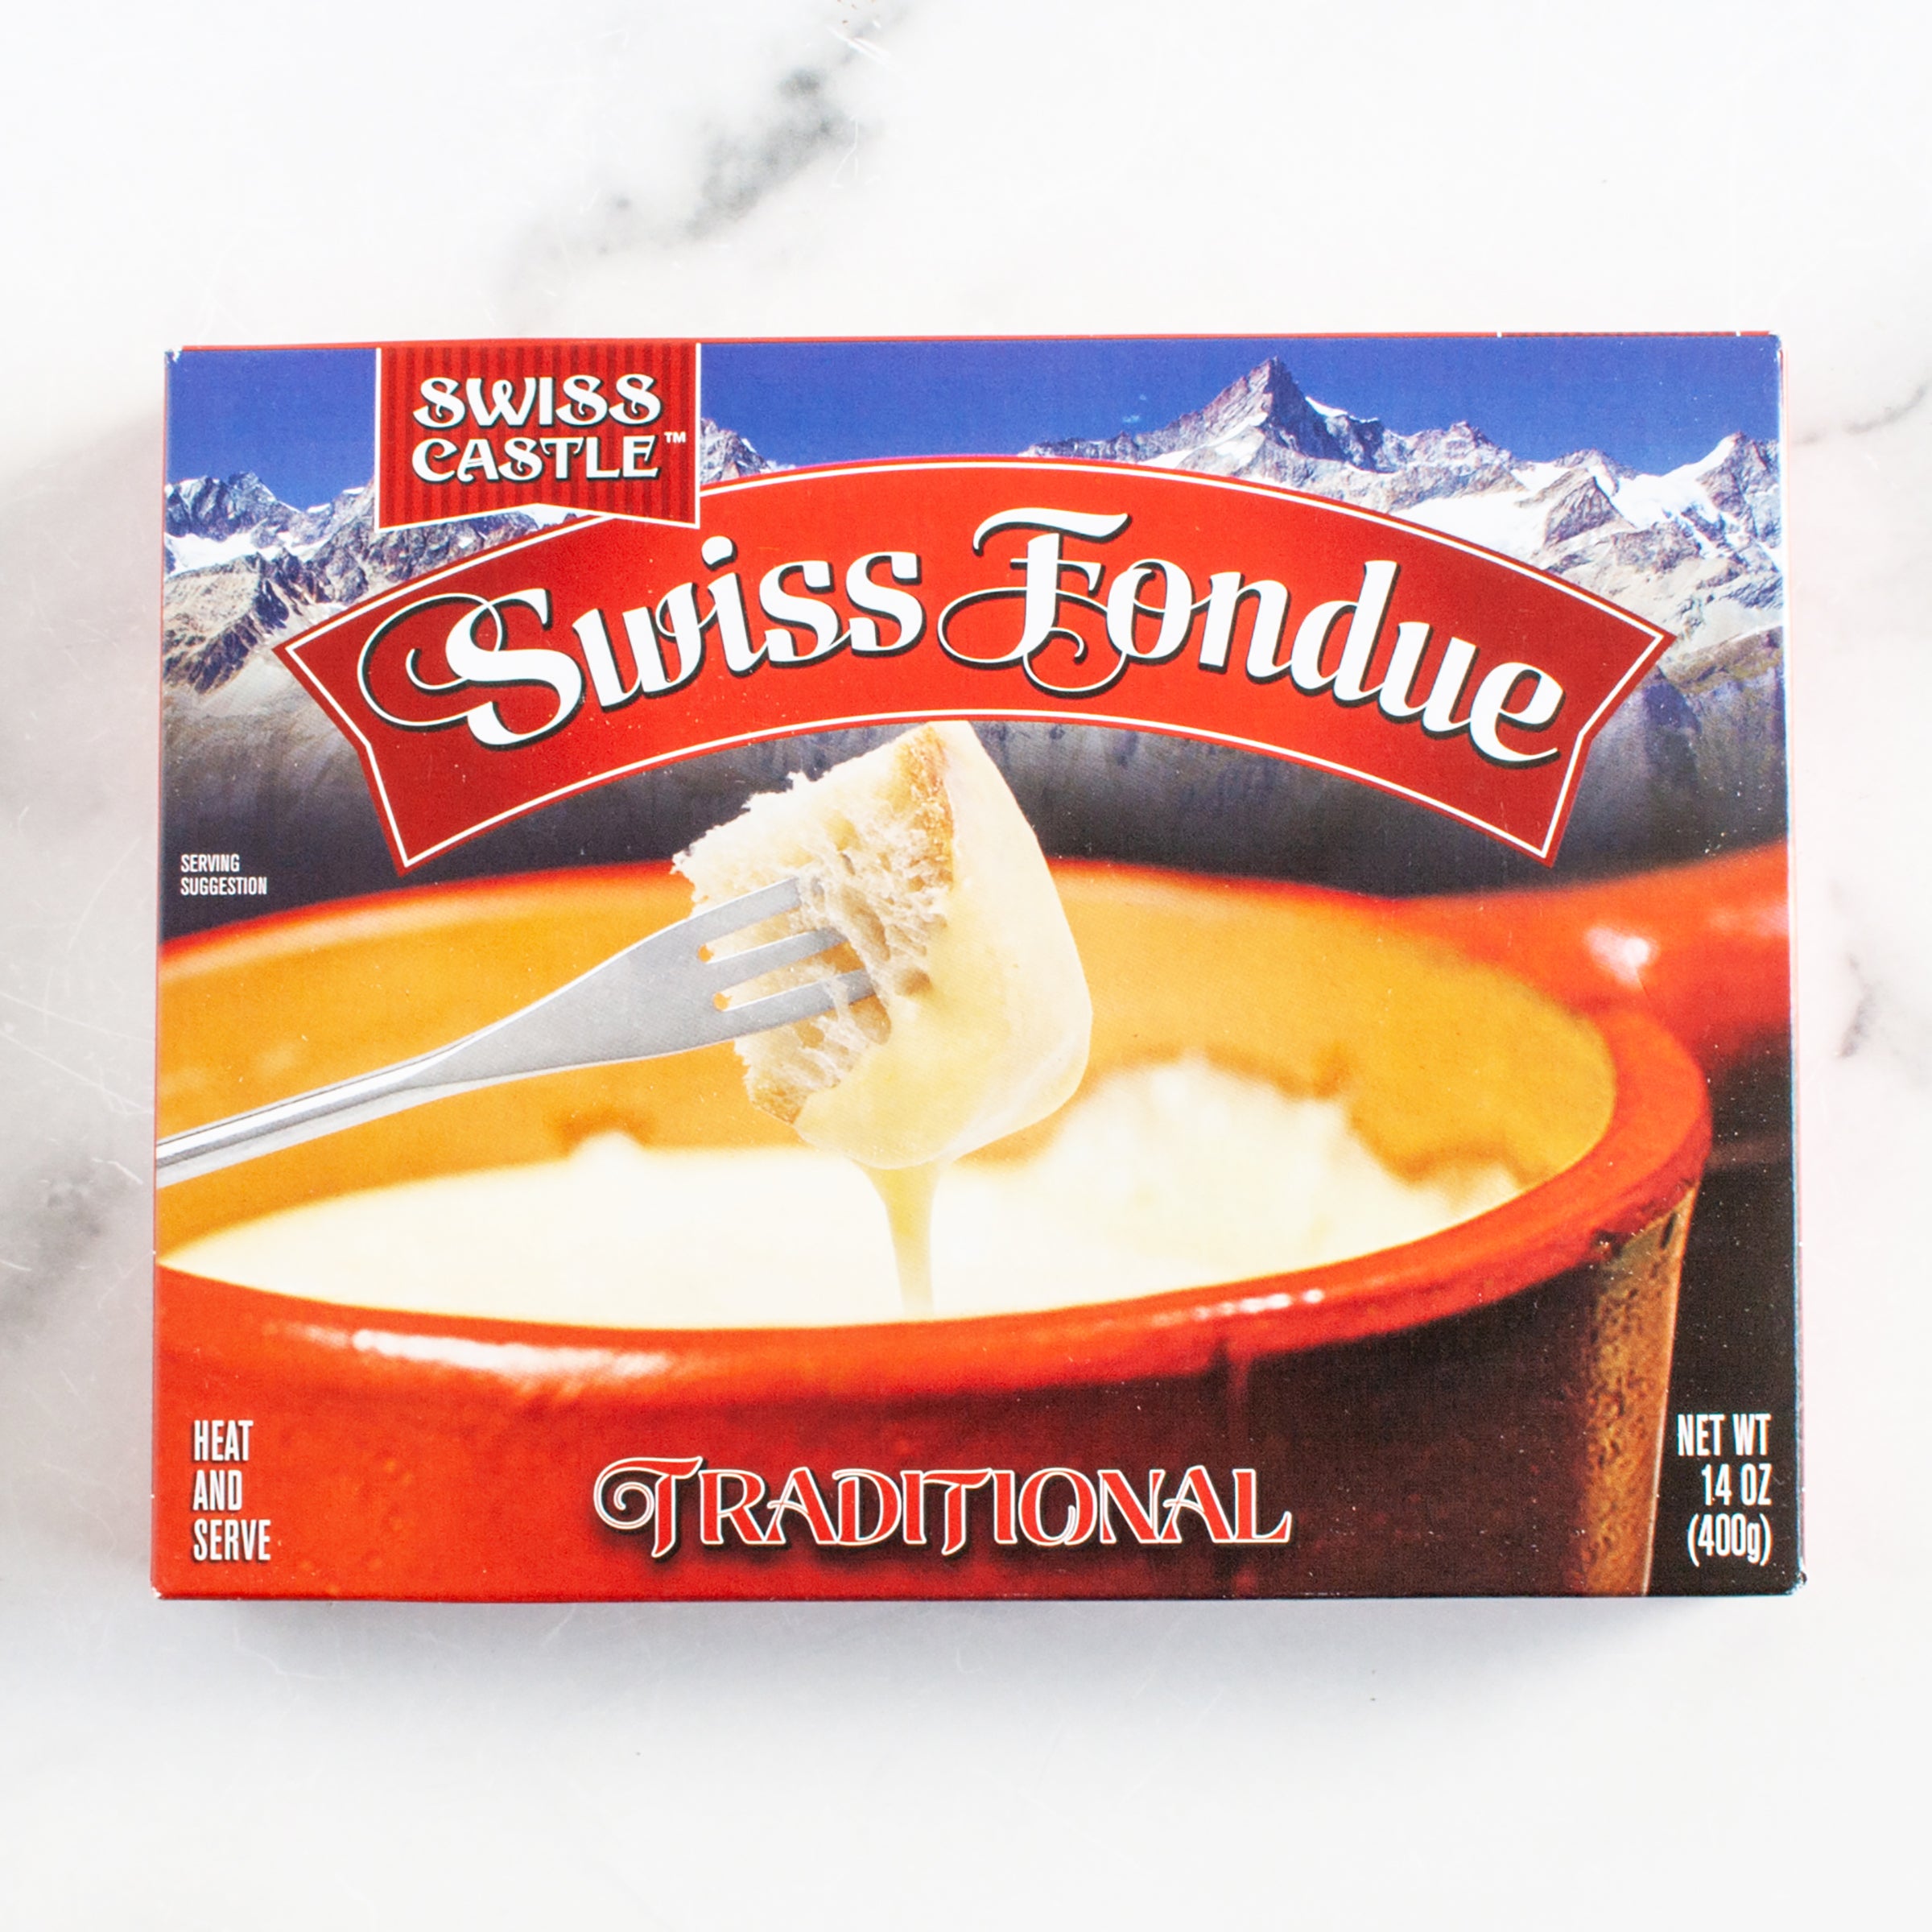 CHOCOLATE FONDUE SETS — Cheese Etc. & Gourmet Gifts